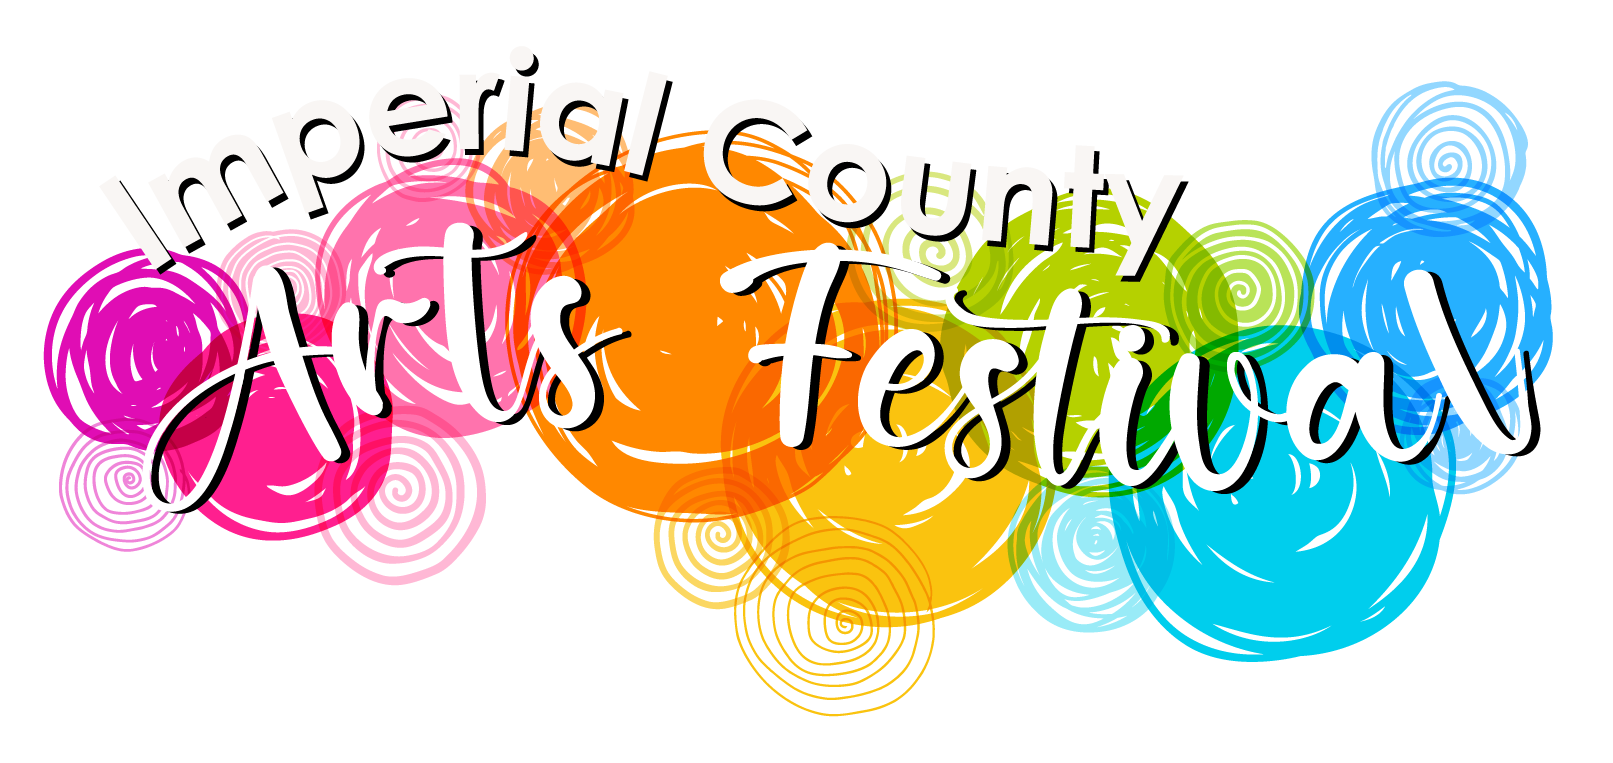 Imperial County Arts Festival Logo